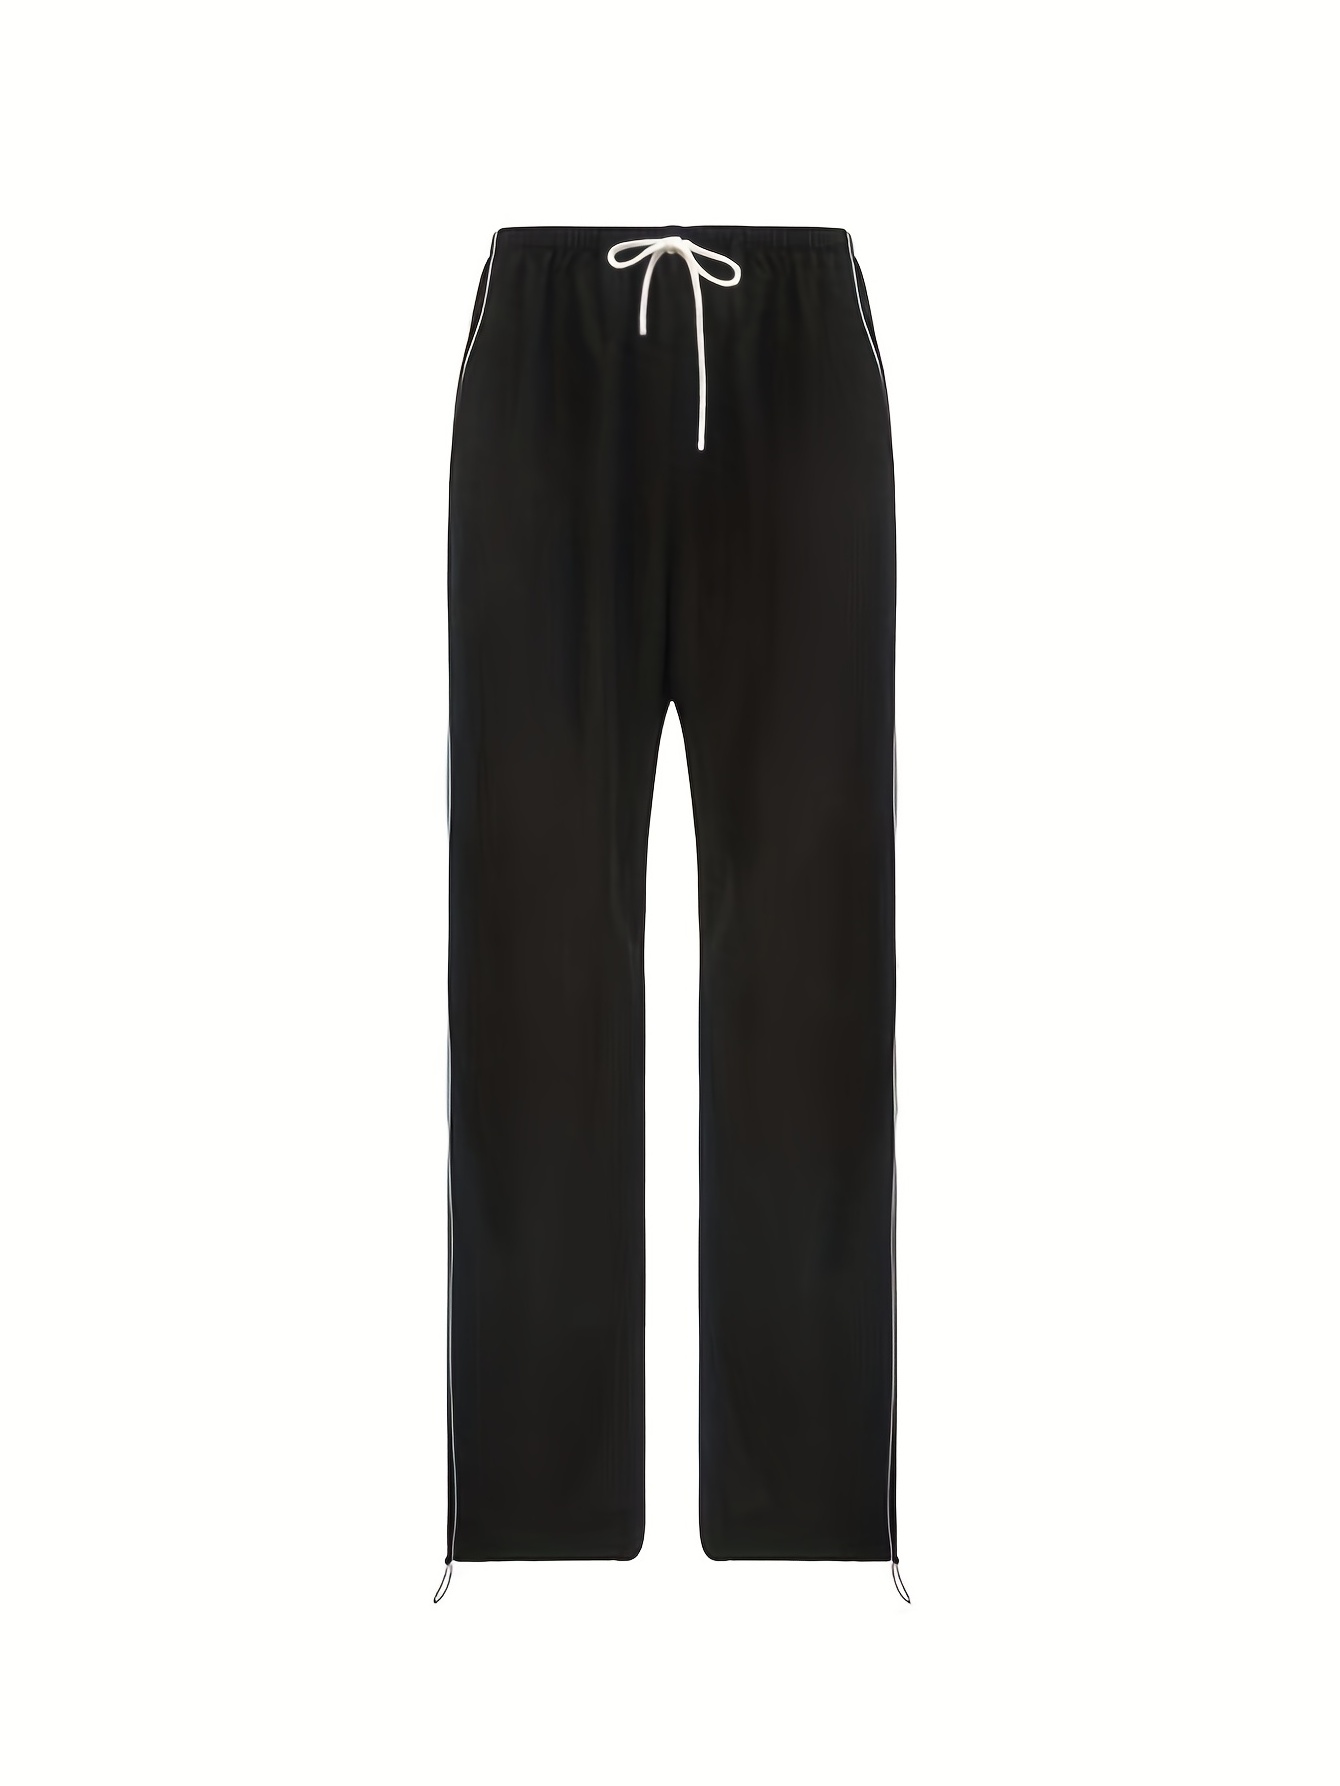 contrast binding drawstring waist pants y2k slant pocket baggy pants womens clothing details 4